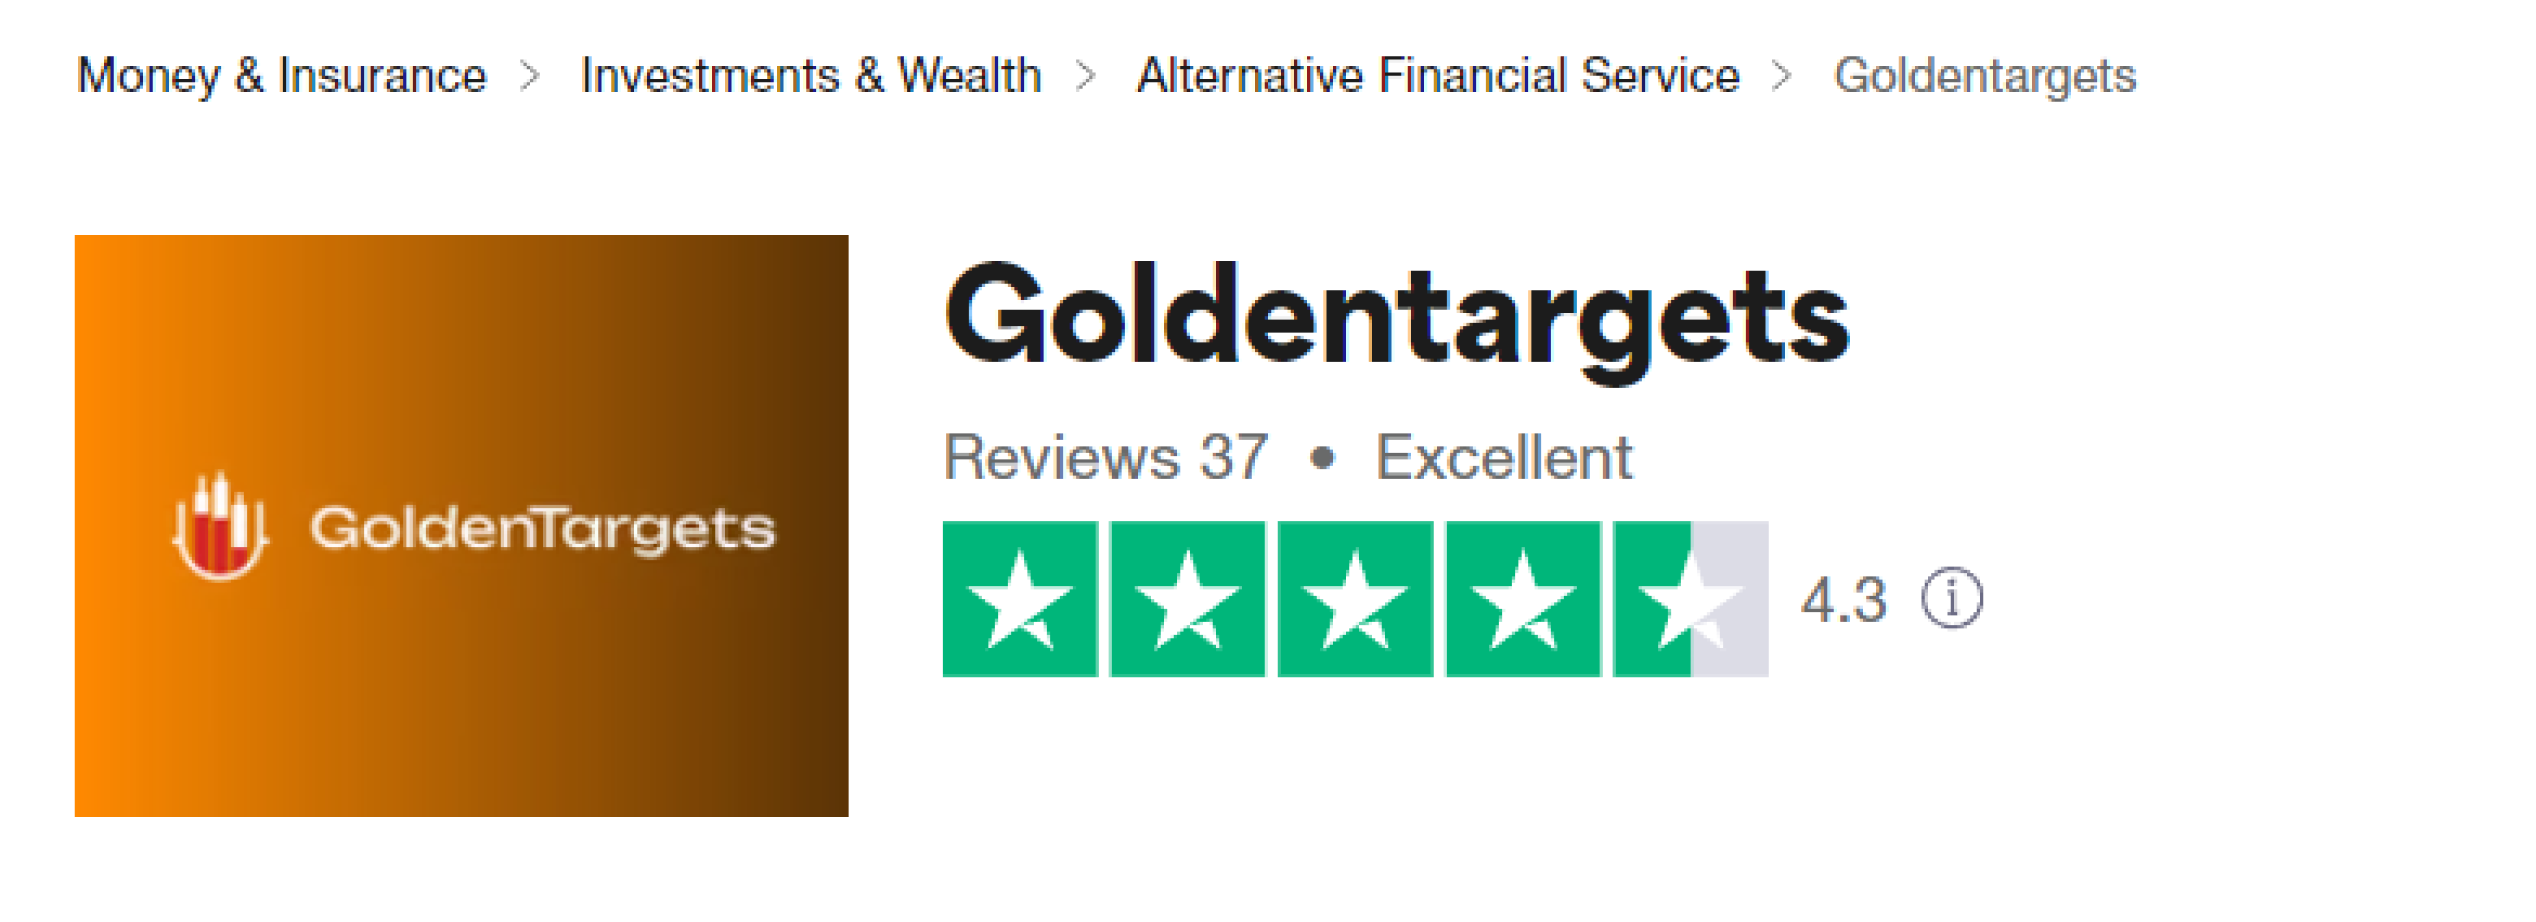 goldentargets reviews trustpilot